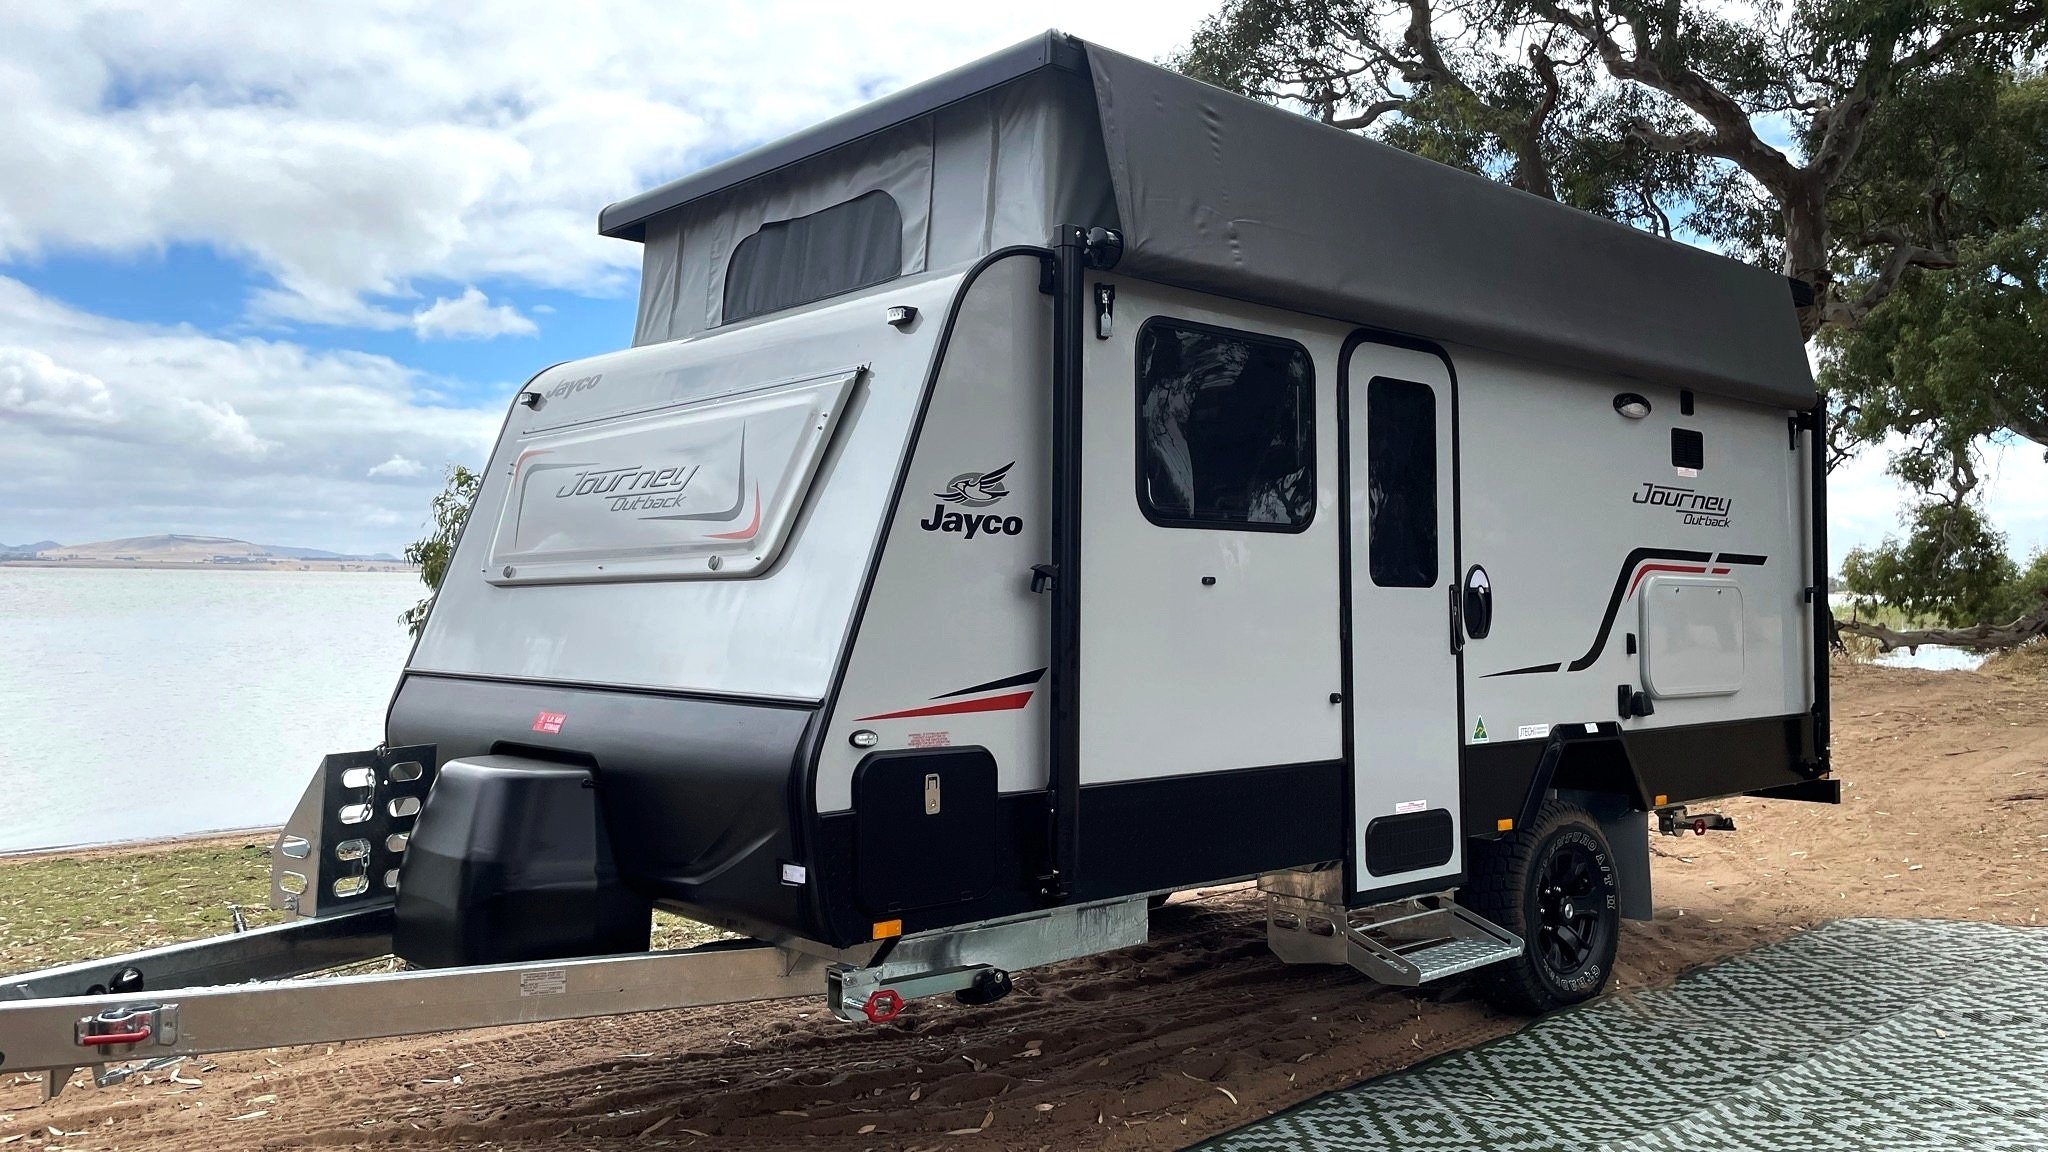 Adventure Caravan Hire Ballarat | New Jayco caravans for hire